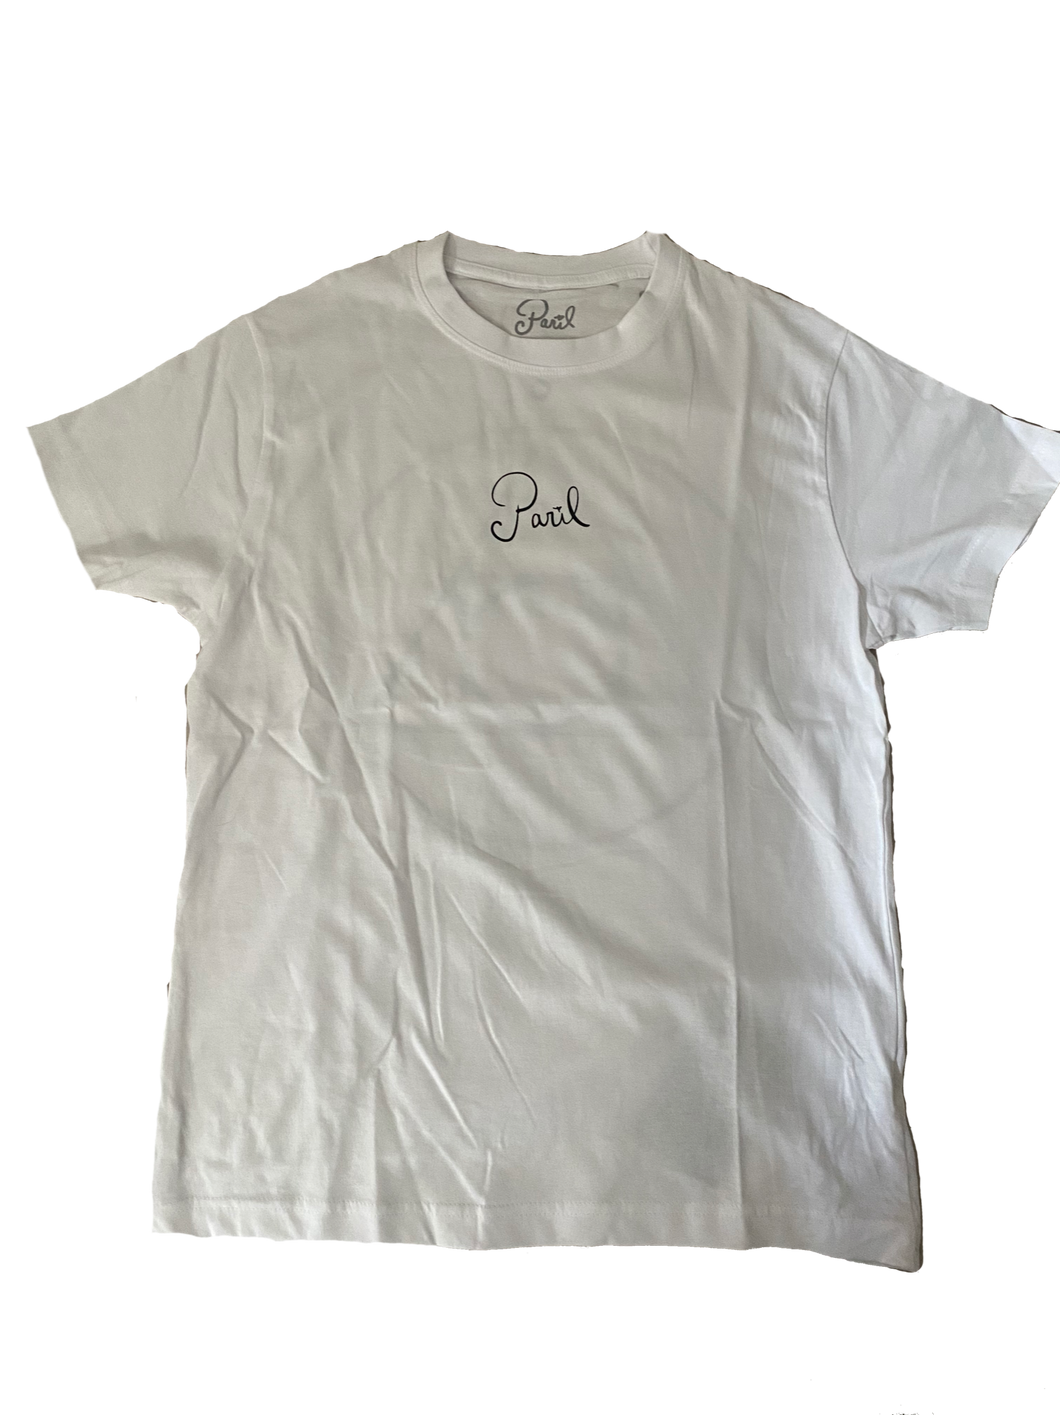 Paril Logos T-Shirt (White)